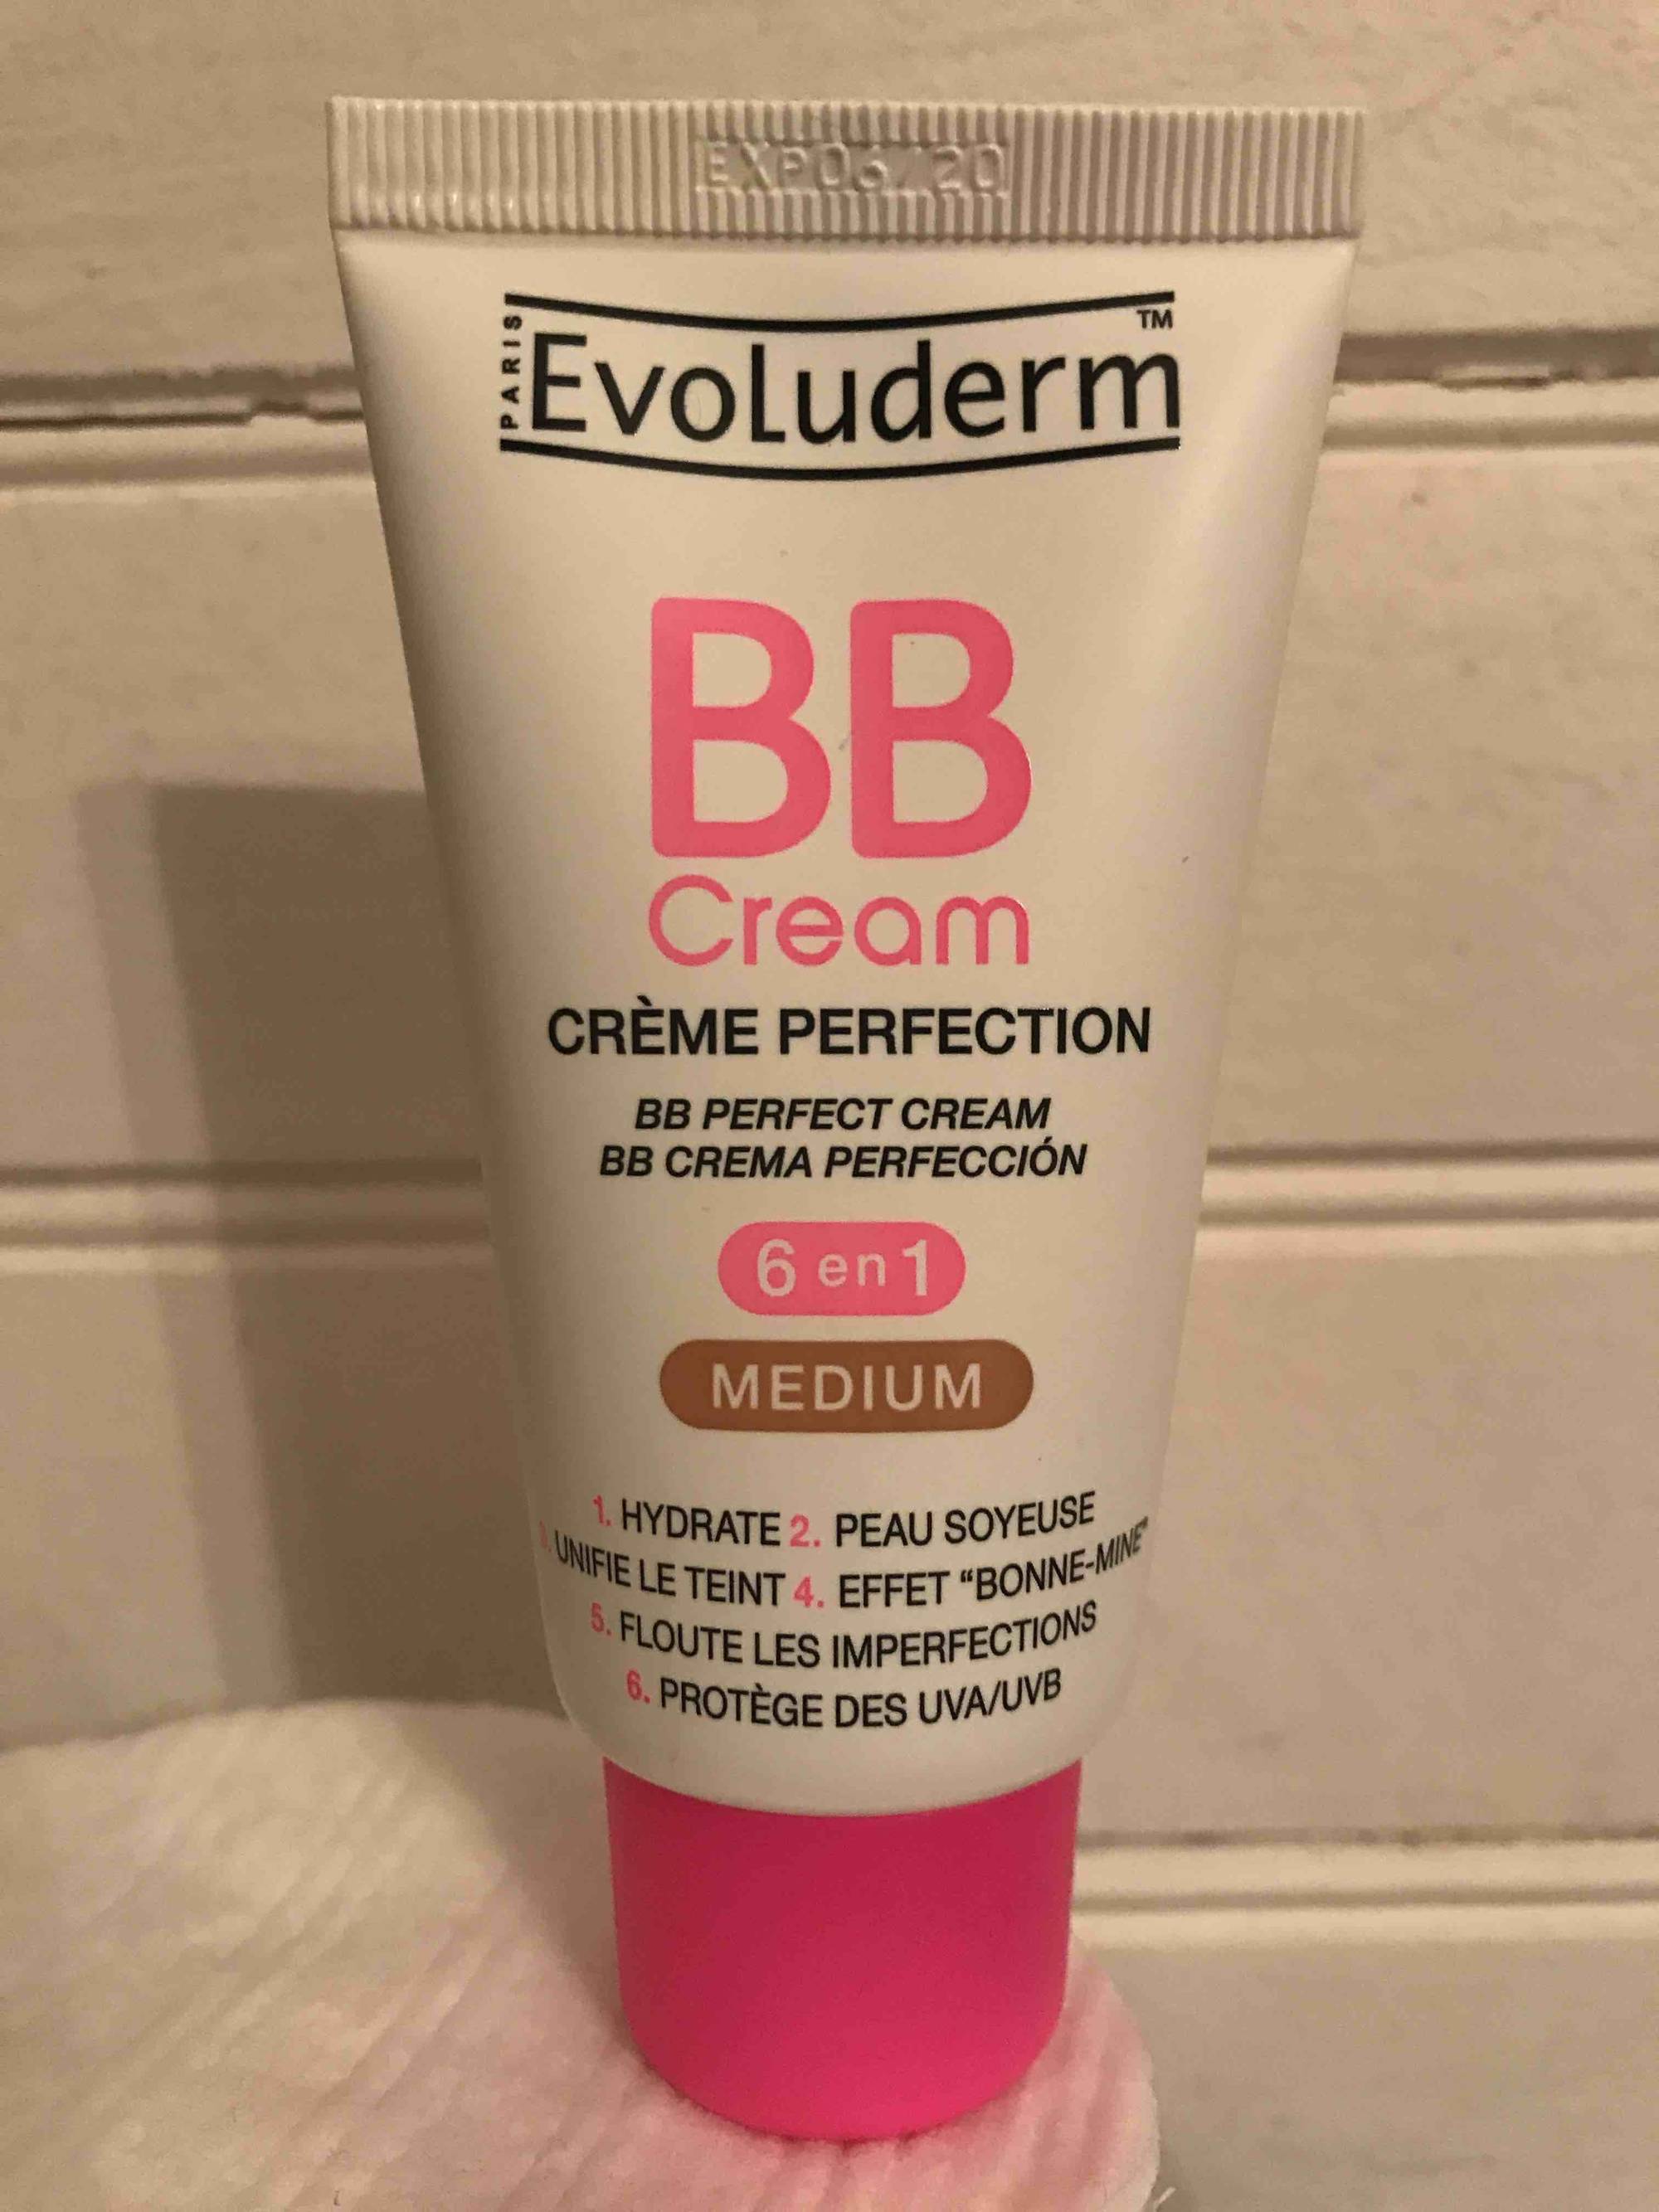 EVOLUDERM - BB cream - Crème perfection 6 en 1 médium